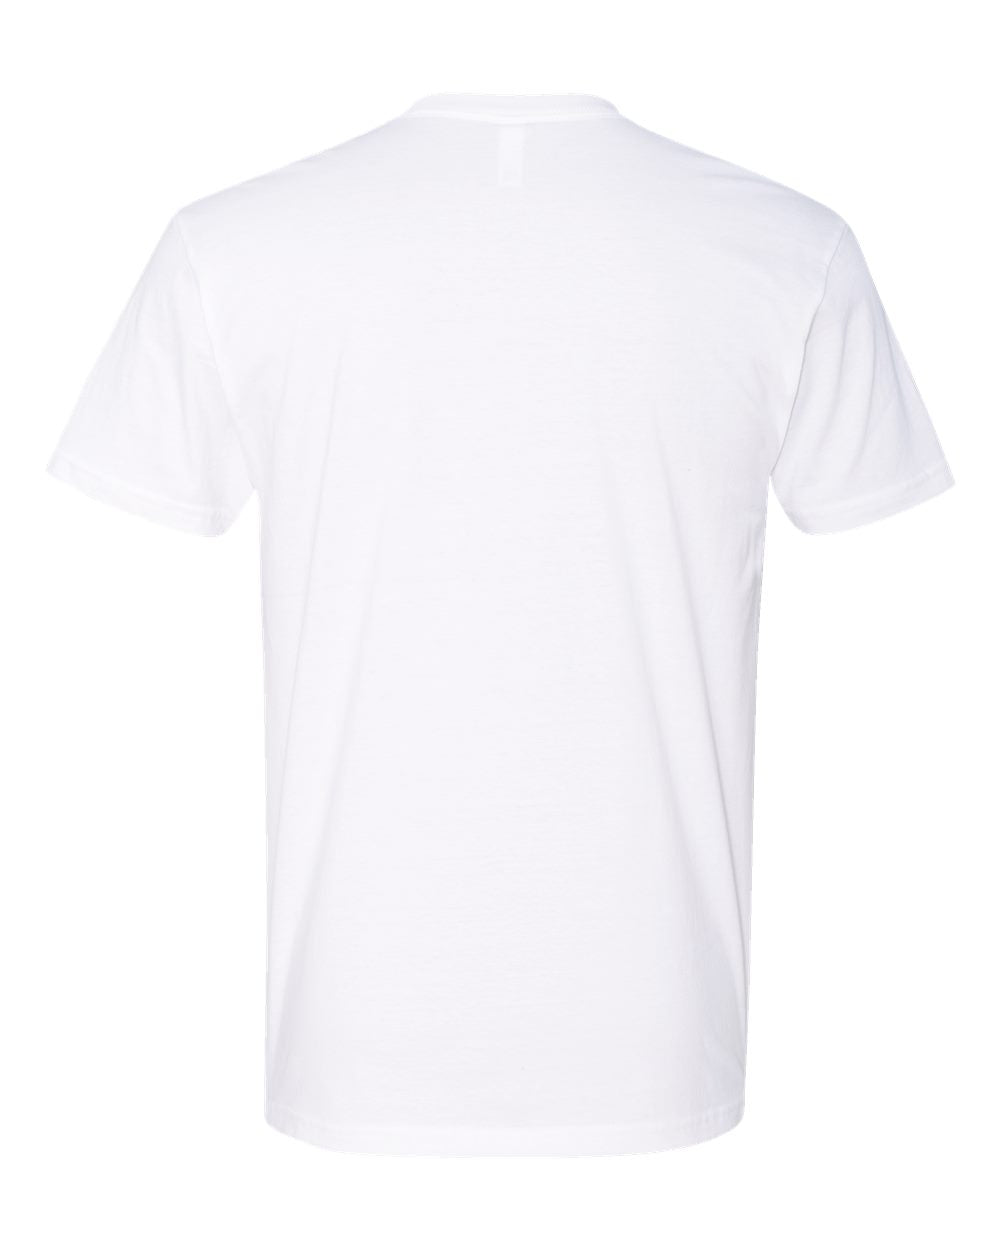 Unisex Shirts 3600 - Kyublis DZigns